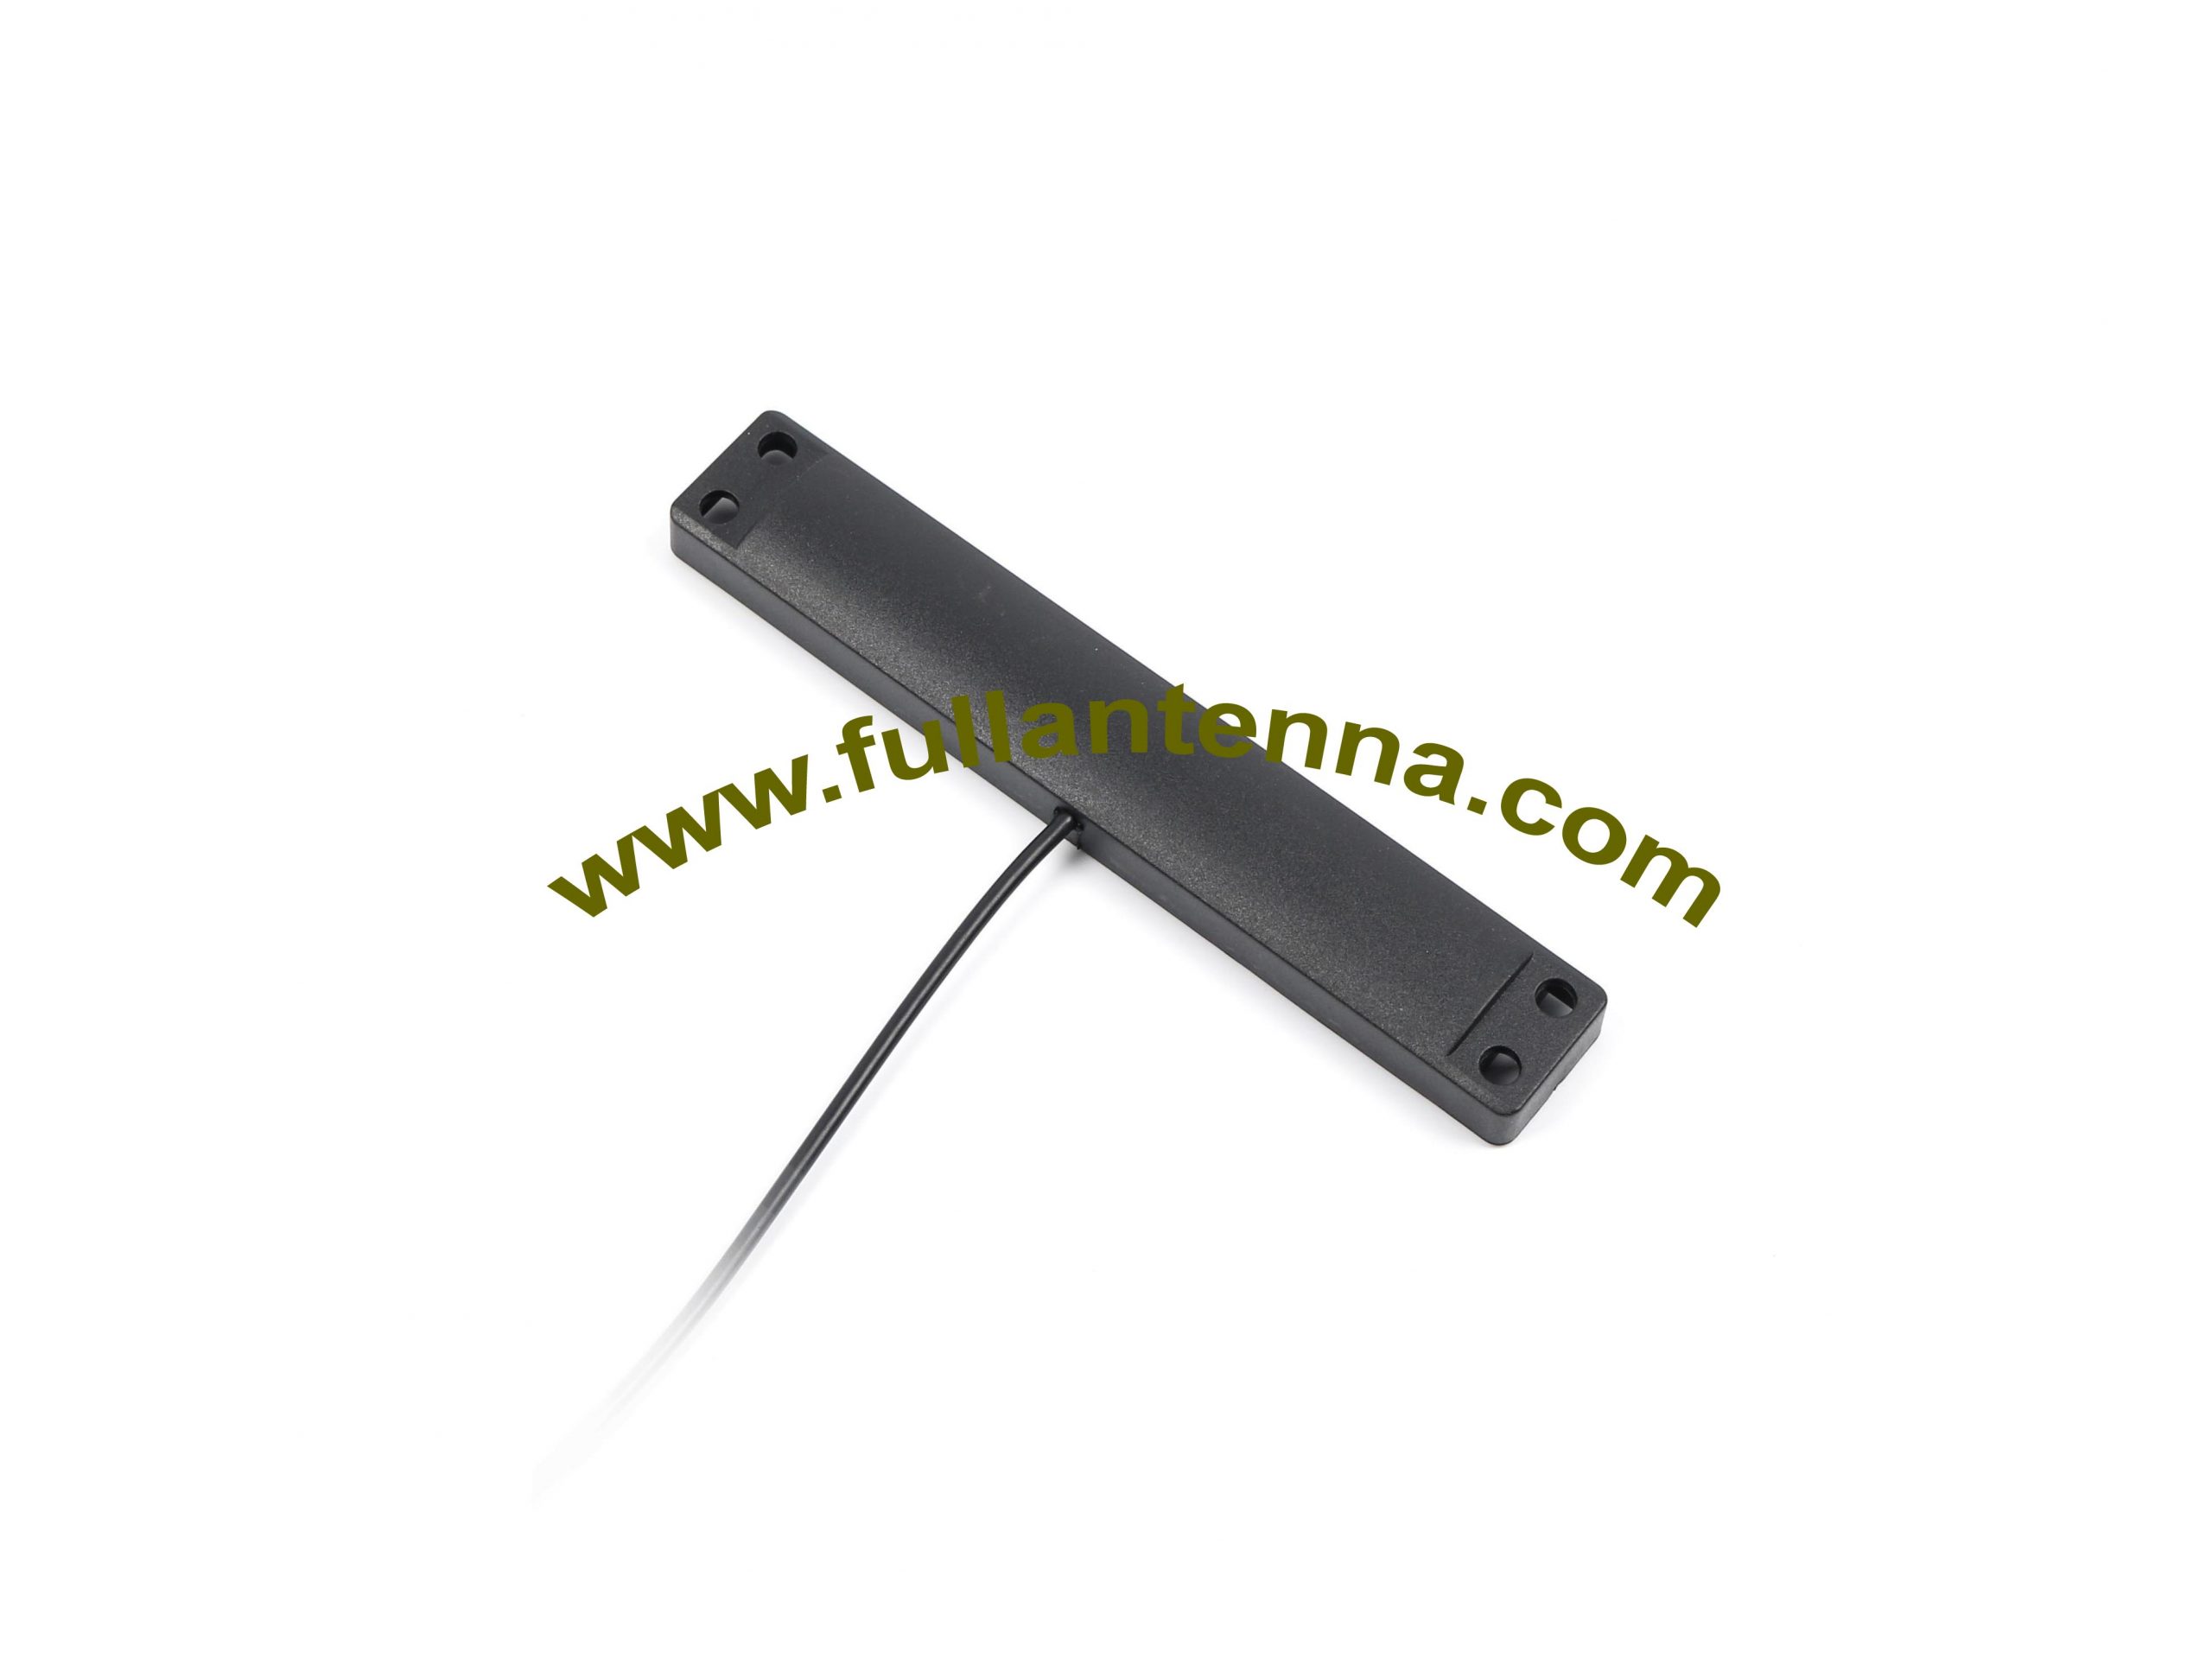 P / N: Antena FA868.0503,868Mhz, antena T RFID 868mhz montaje adhesivo 100% impermeable